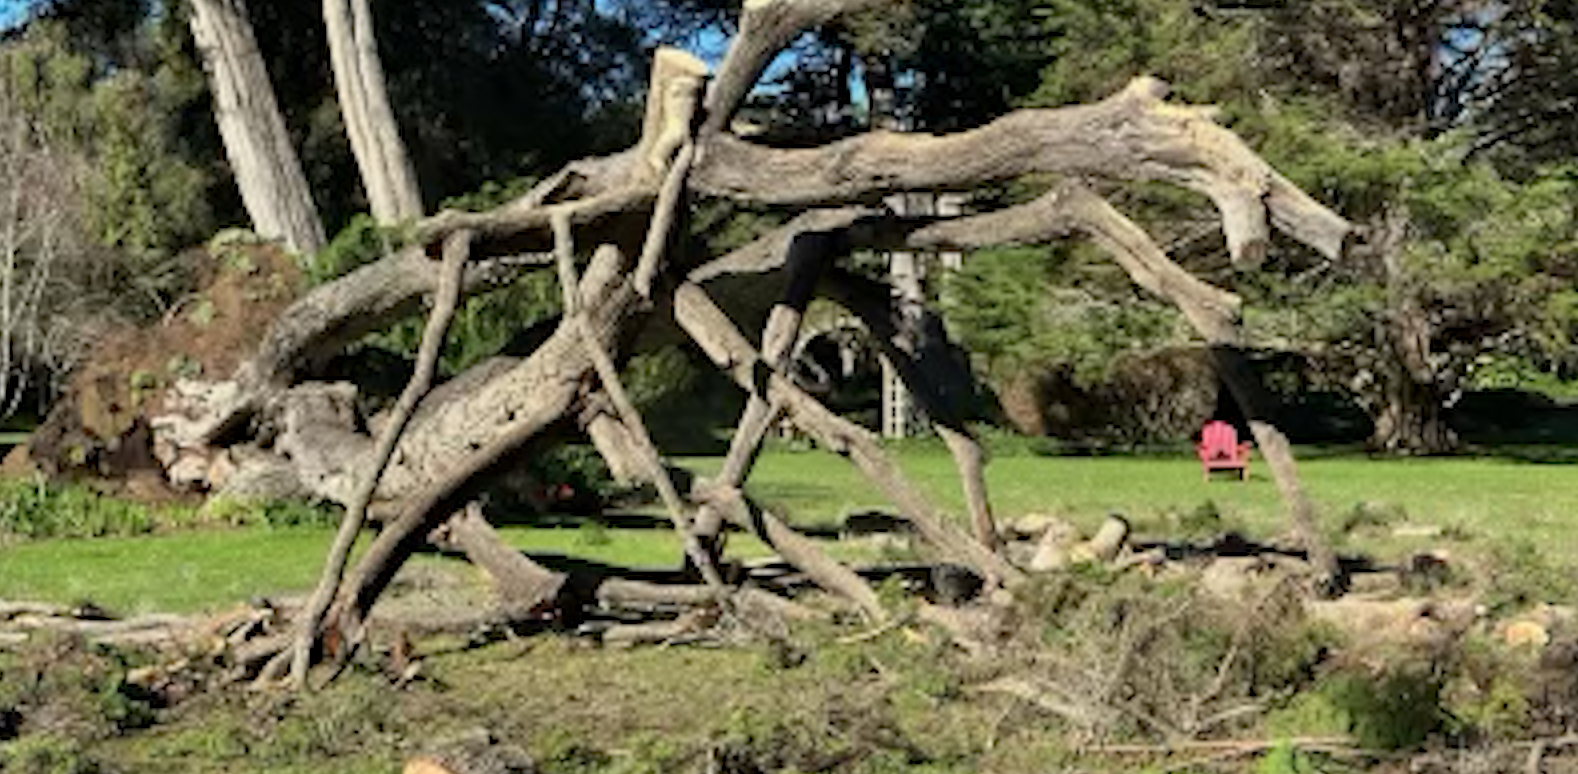 Rainstorm brings high call volume for local tree service in Santa Barbara